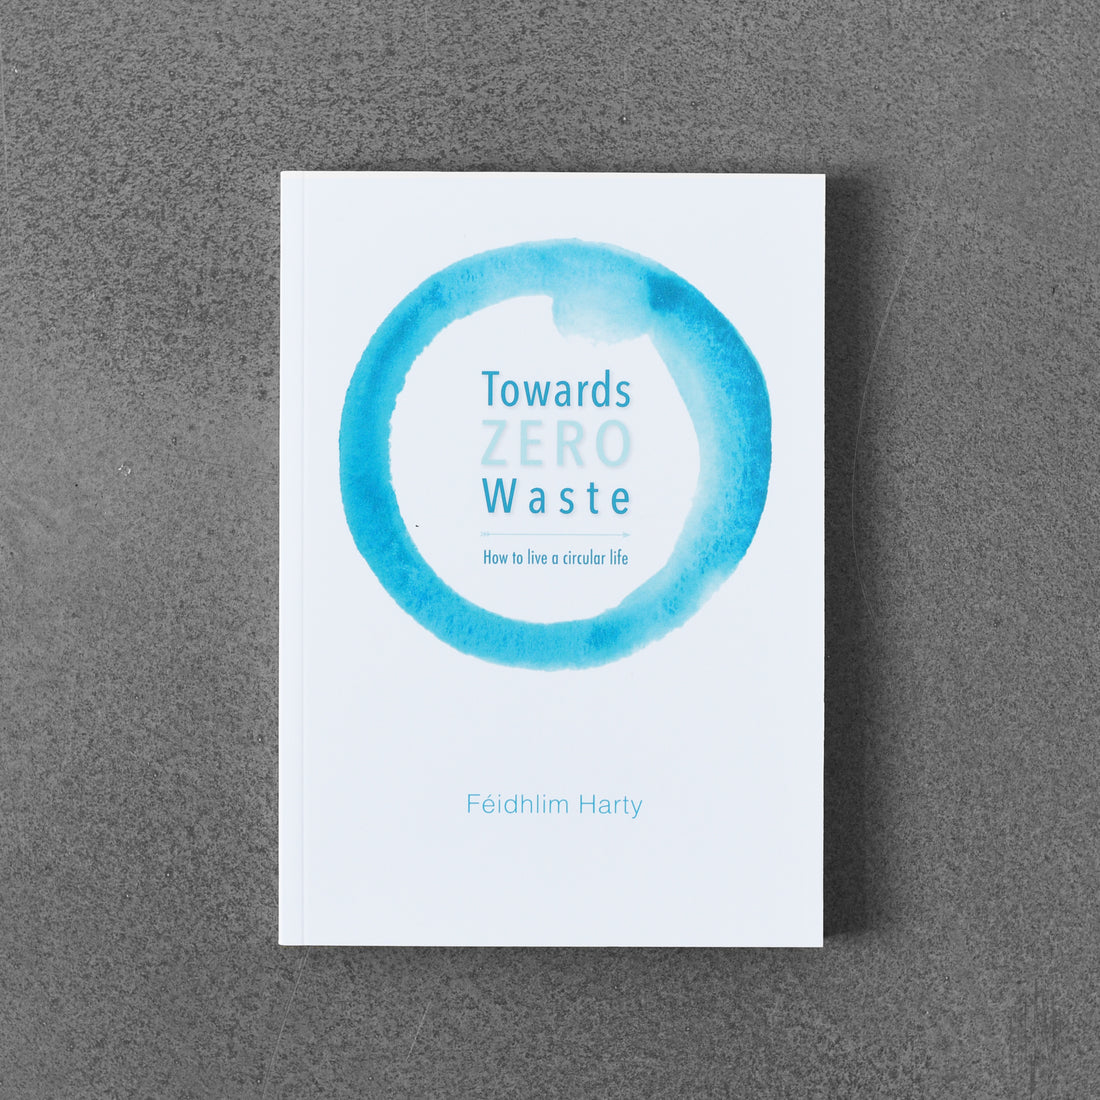 Towards Zero Waste - Feidhlim Harty